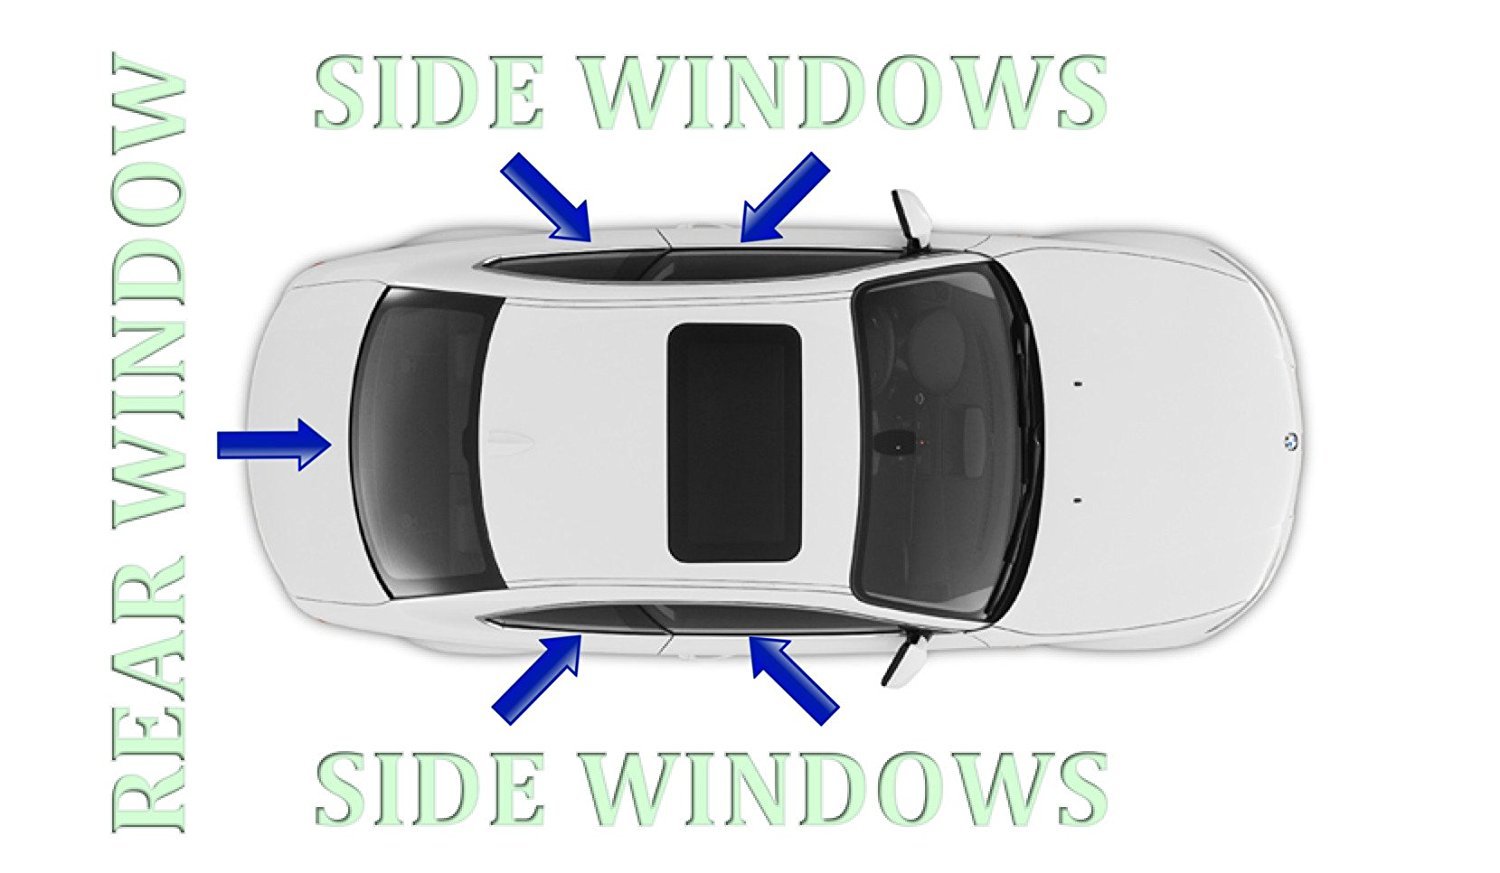 Autotech Park Precut Window Tinting Film for 2013-2017 Hyundai Elantra Hatchback